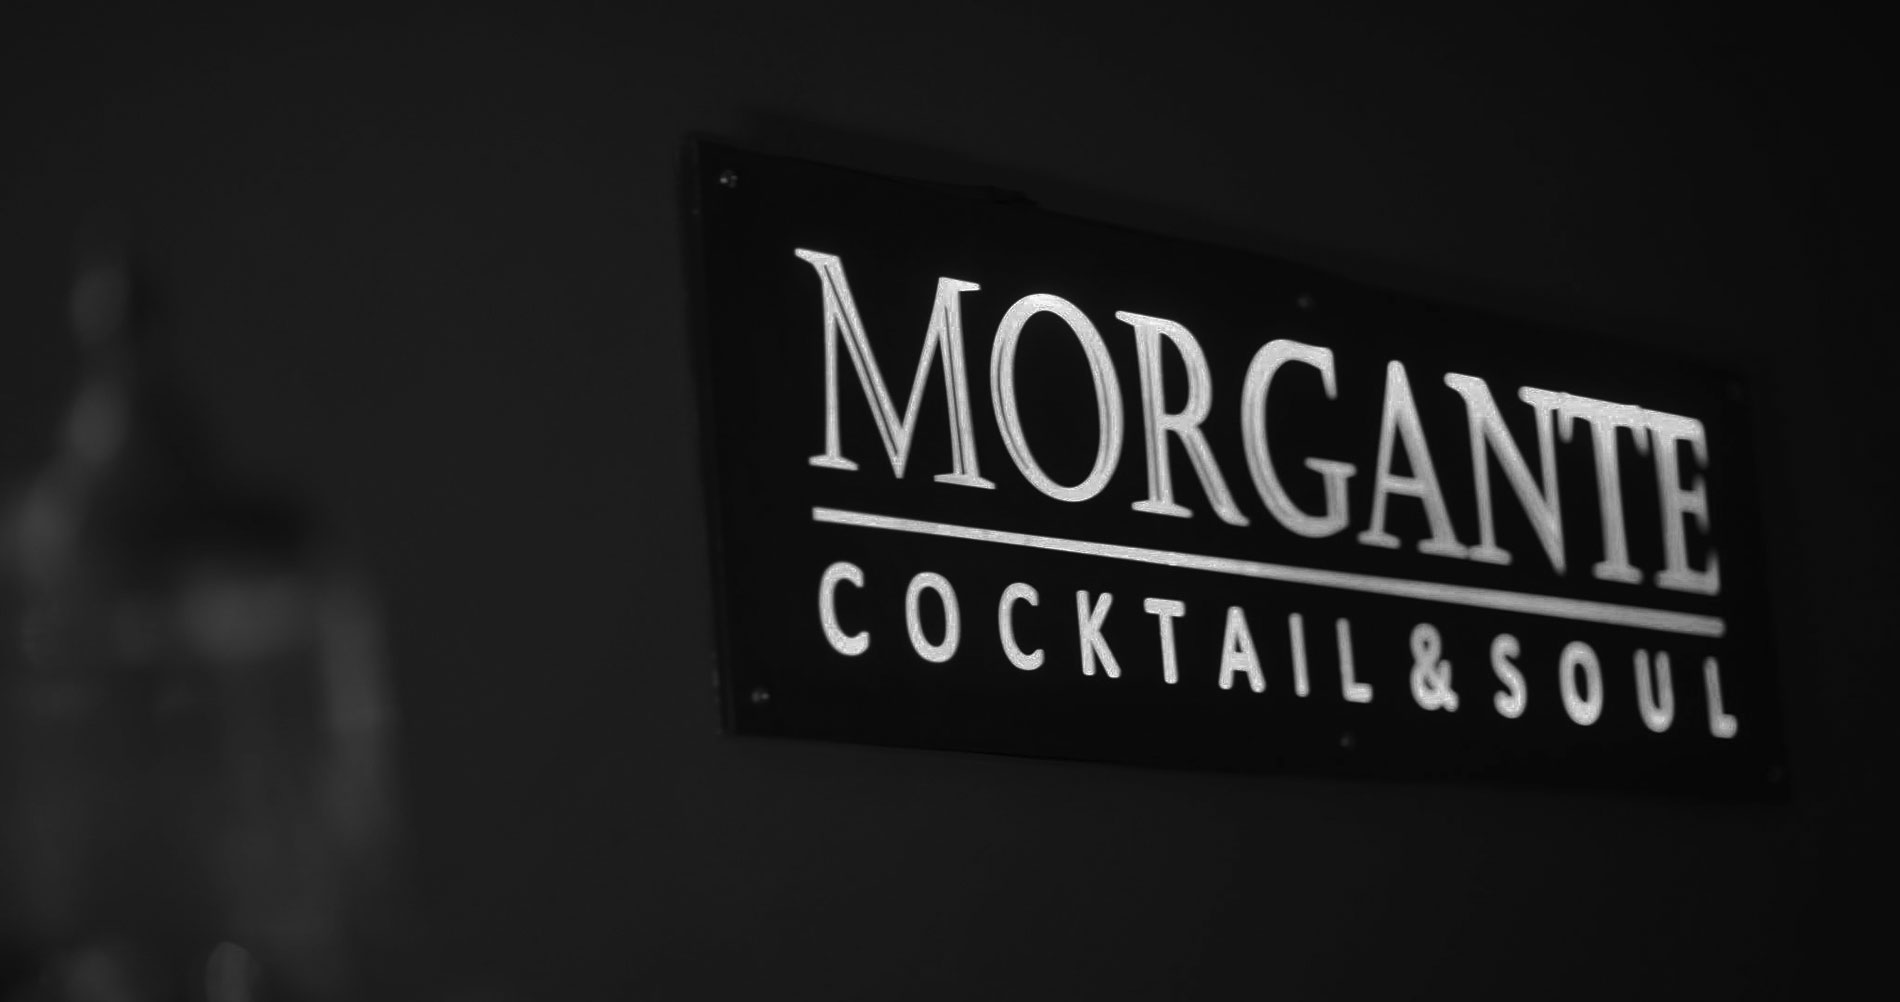 Morgante Cocktail&soul Milano